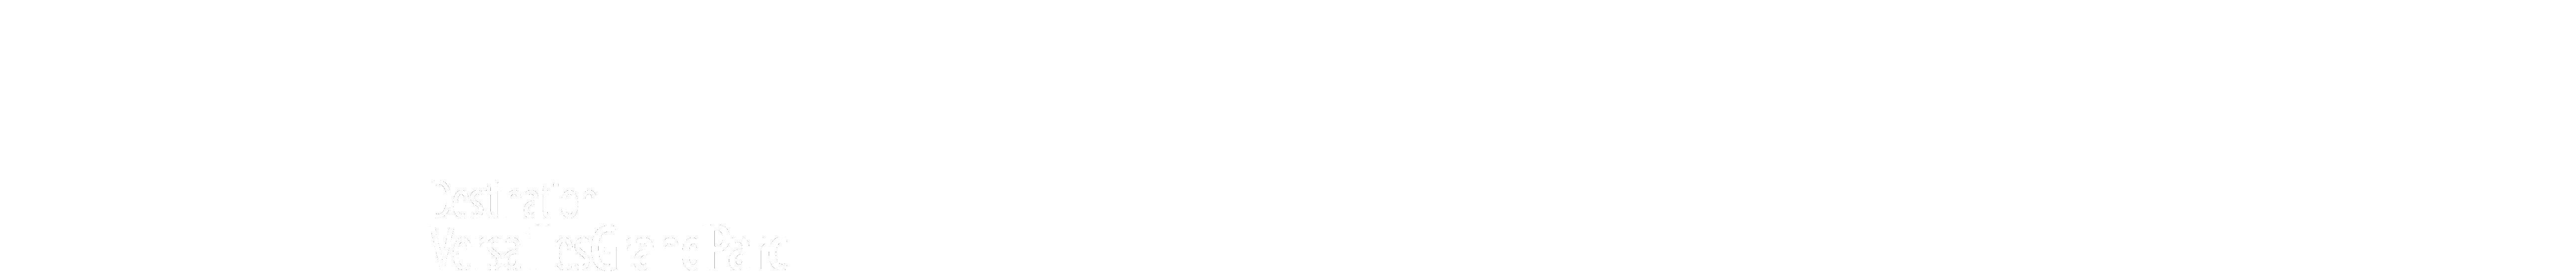 logos_Louvre-lens_Versailles_BPI